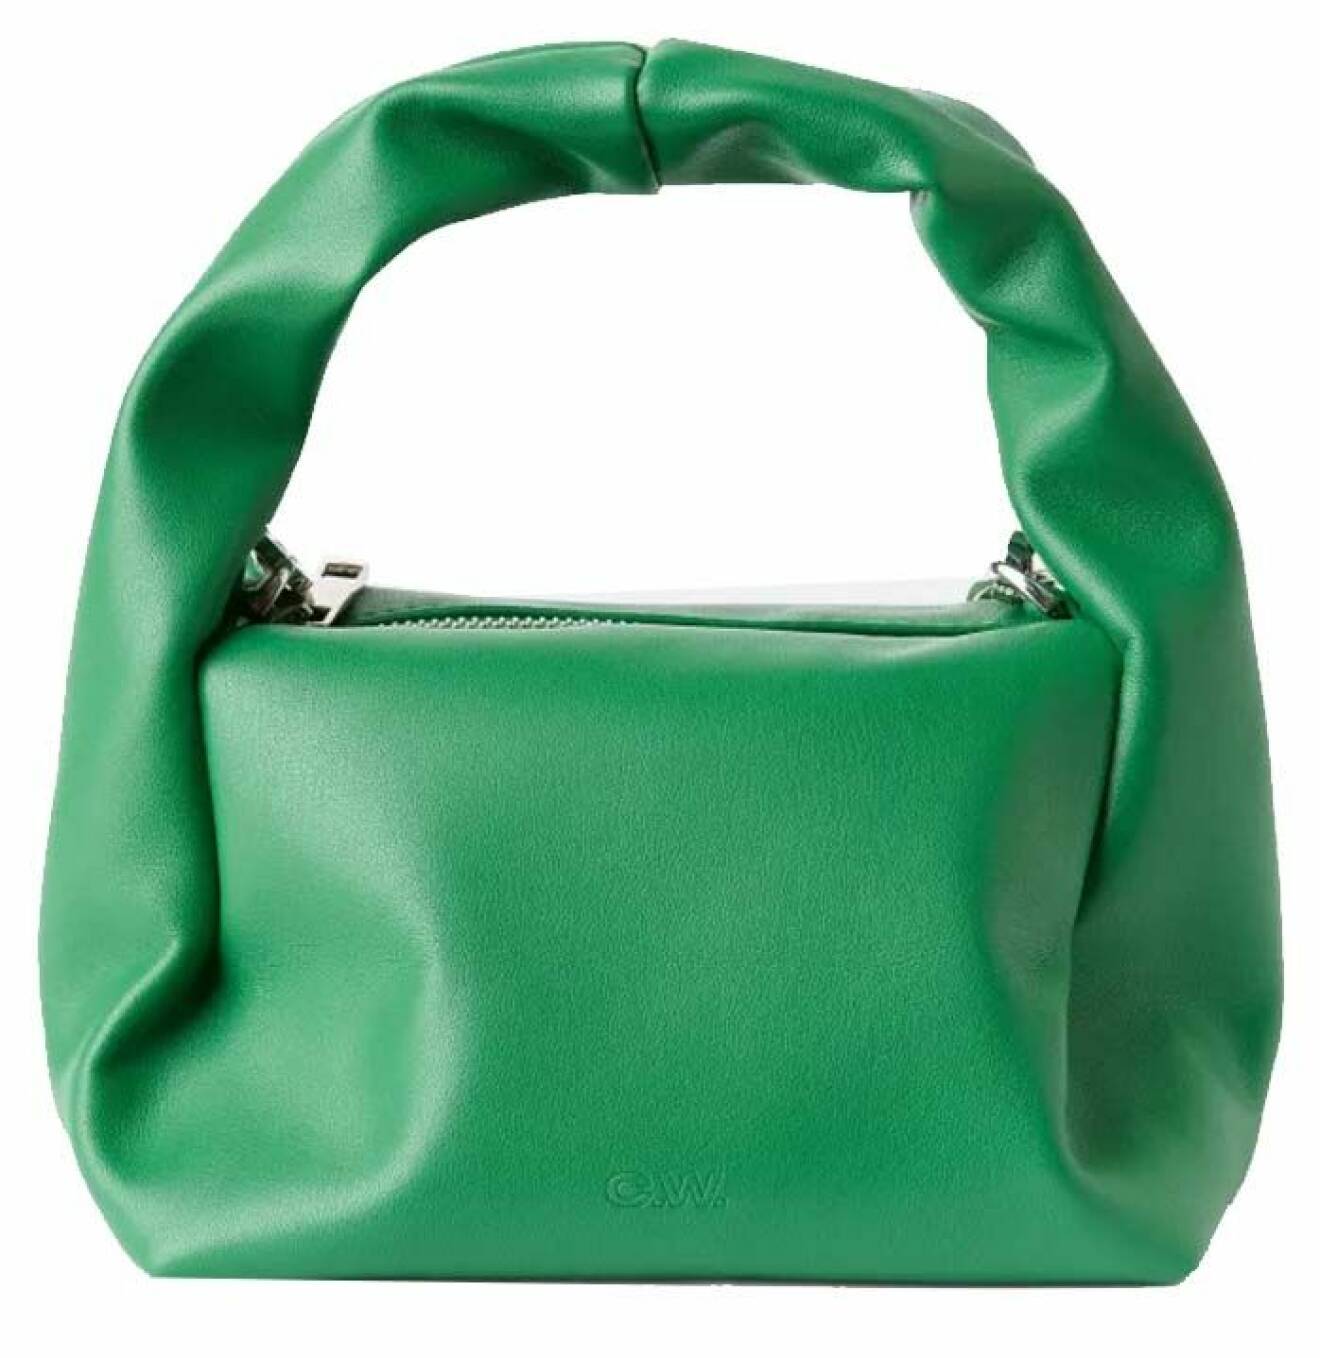 Grön väska, CW by Carin Wester